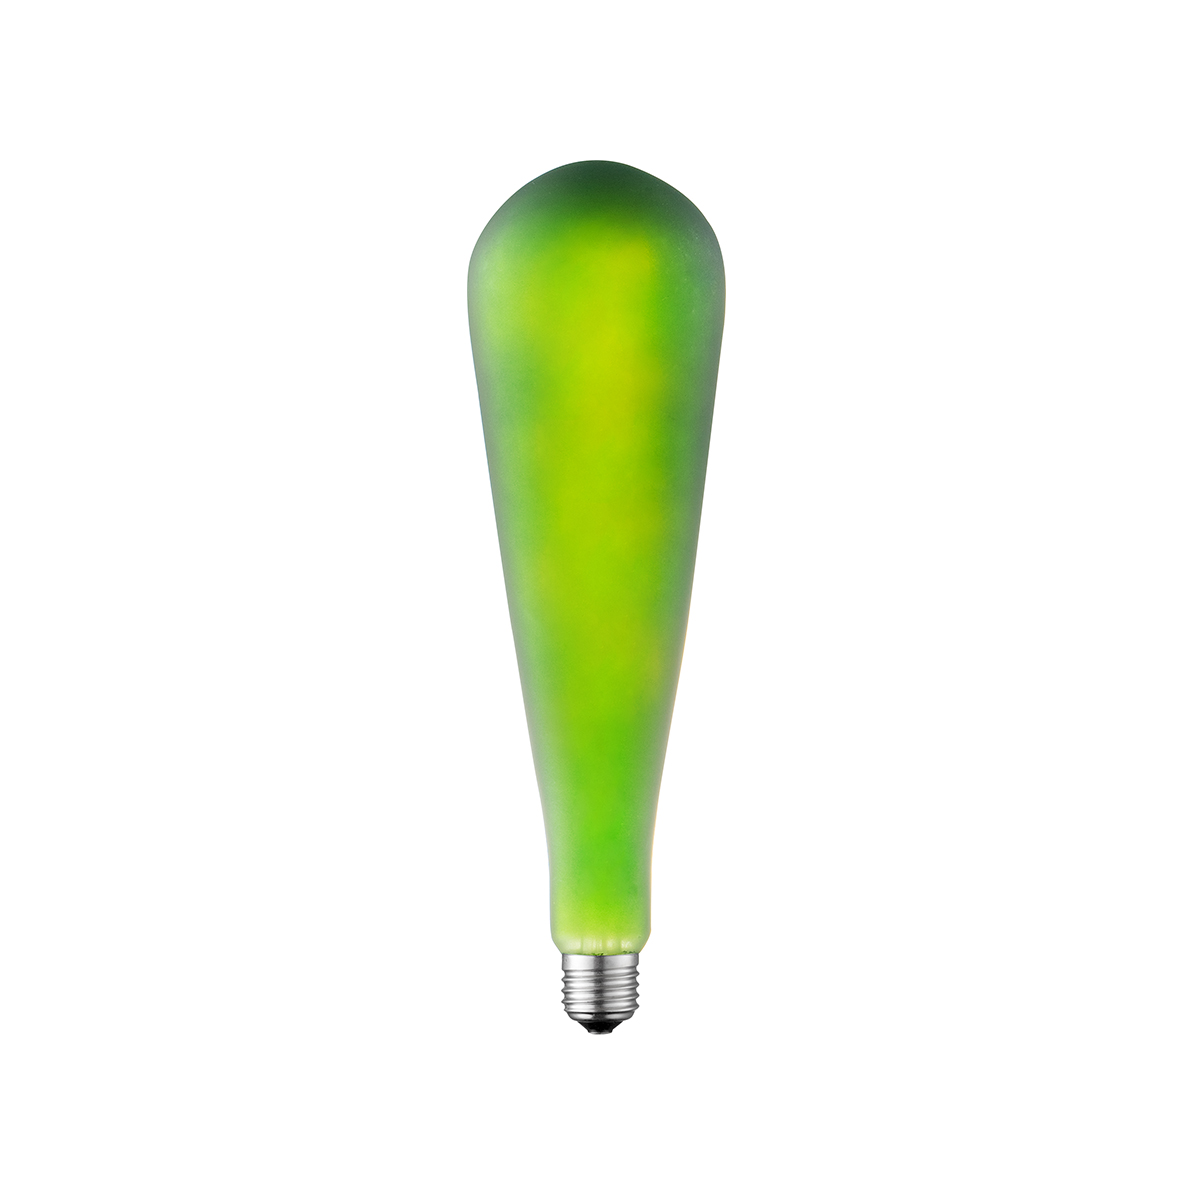 Tangla lighting - TLB-9002-04GN - LED Light Bulb Single Spiral filament - 4W green opal - standard - non dimmable - E27